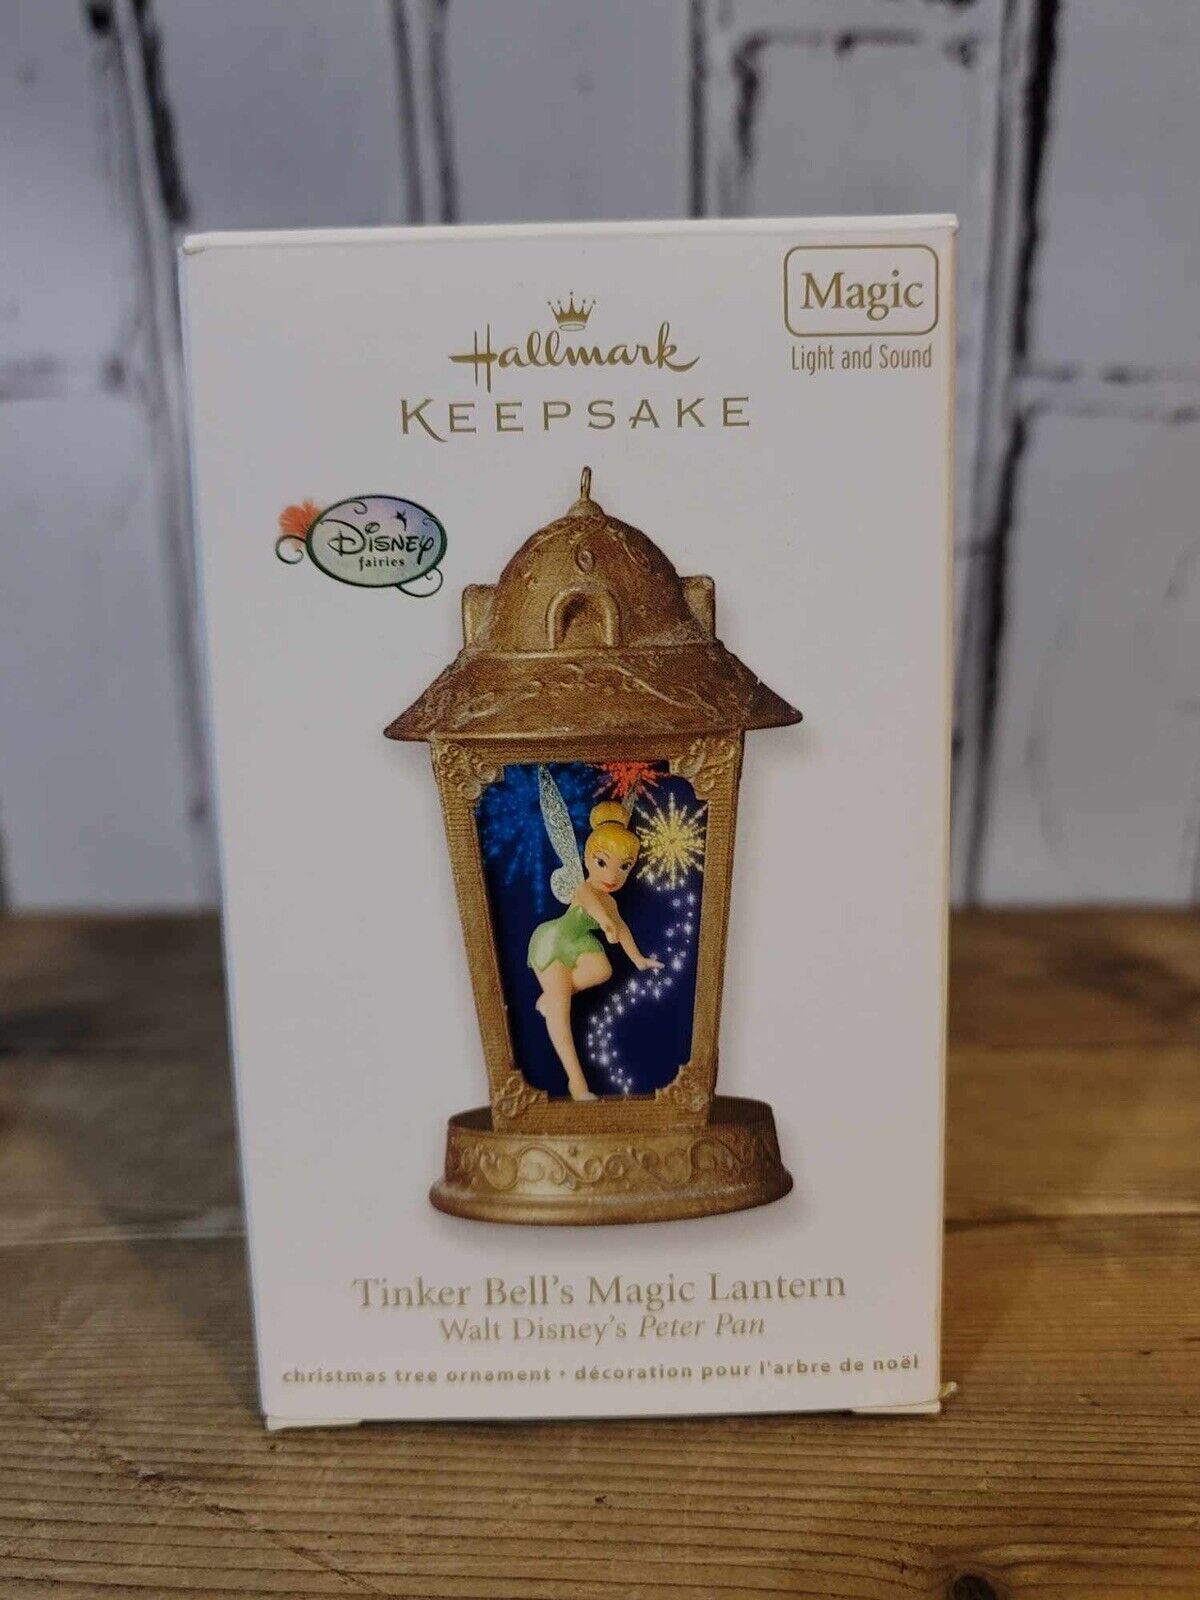 Hallmark Keepsake 2011 Christmas Ornament Peter Pan Tinker Bell's Magic Lantern